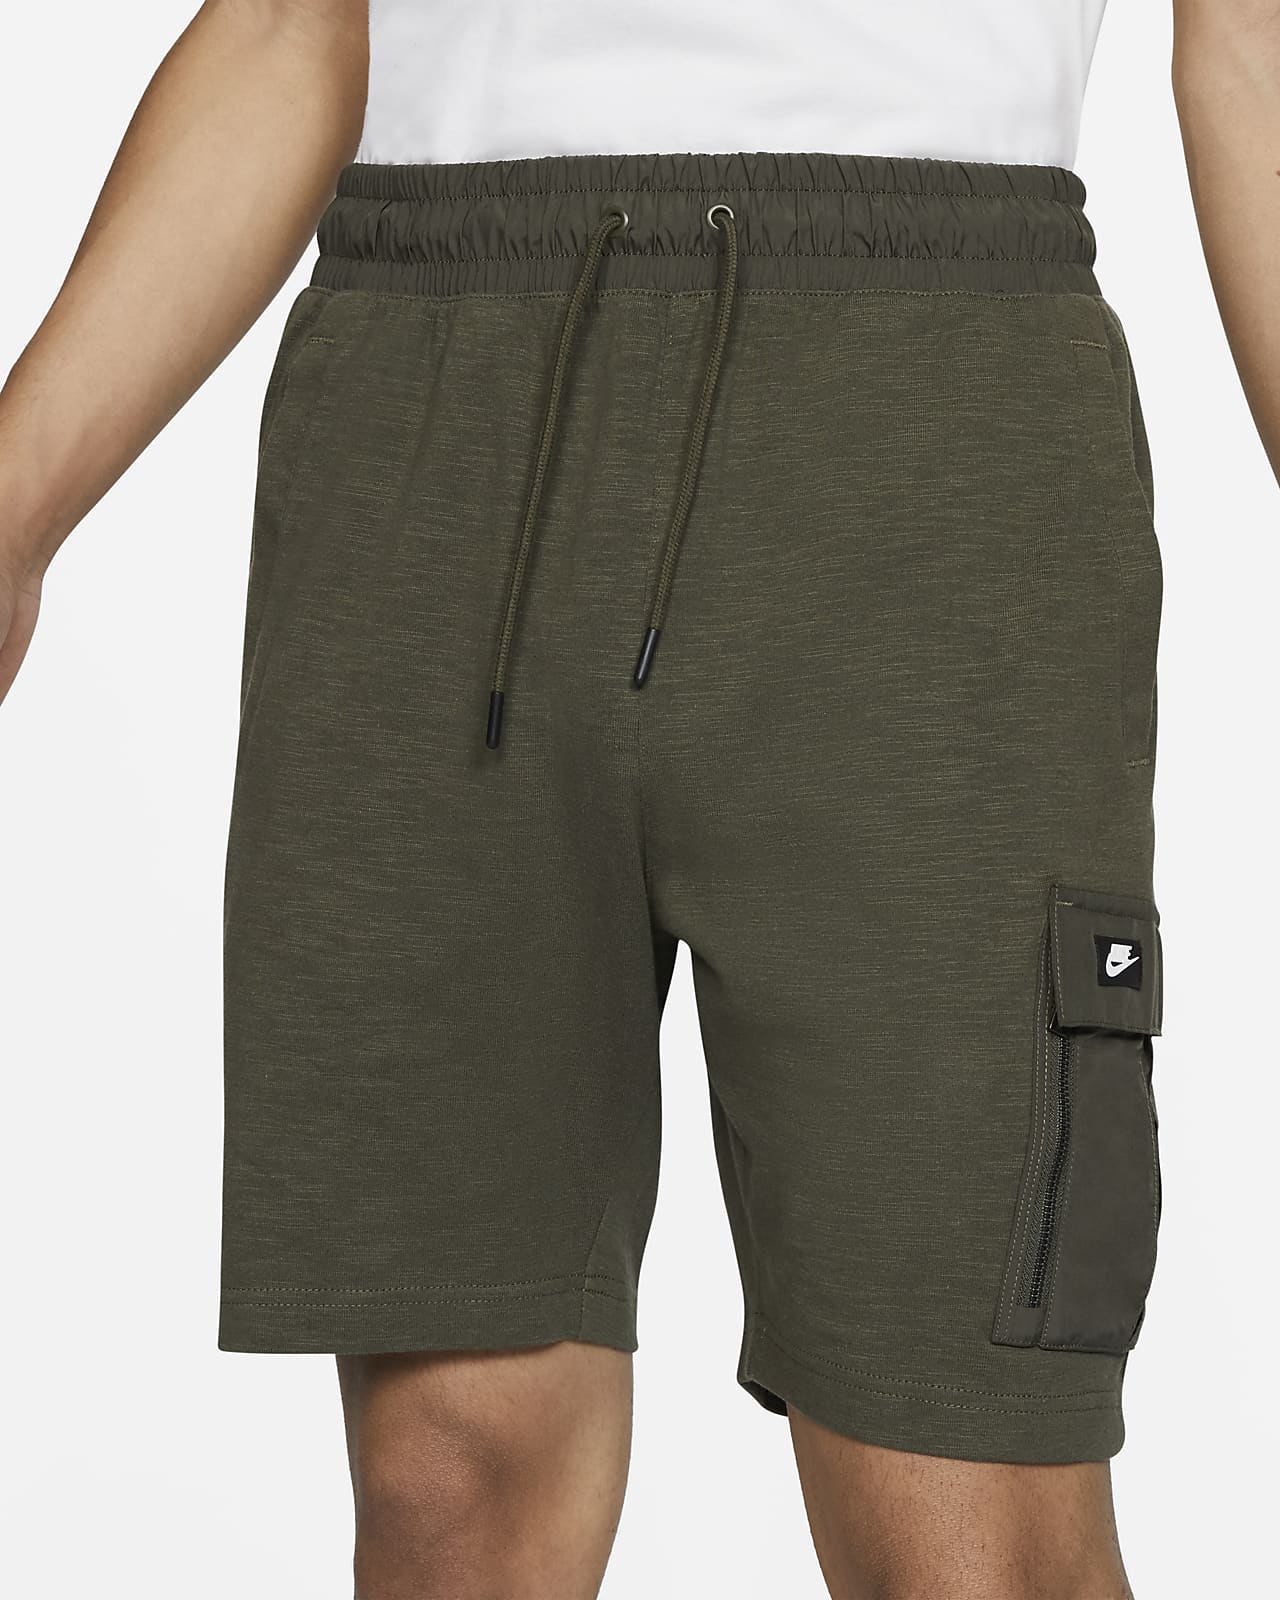 nike shorts standard fit at knee length